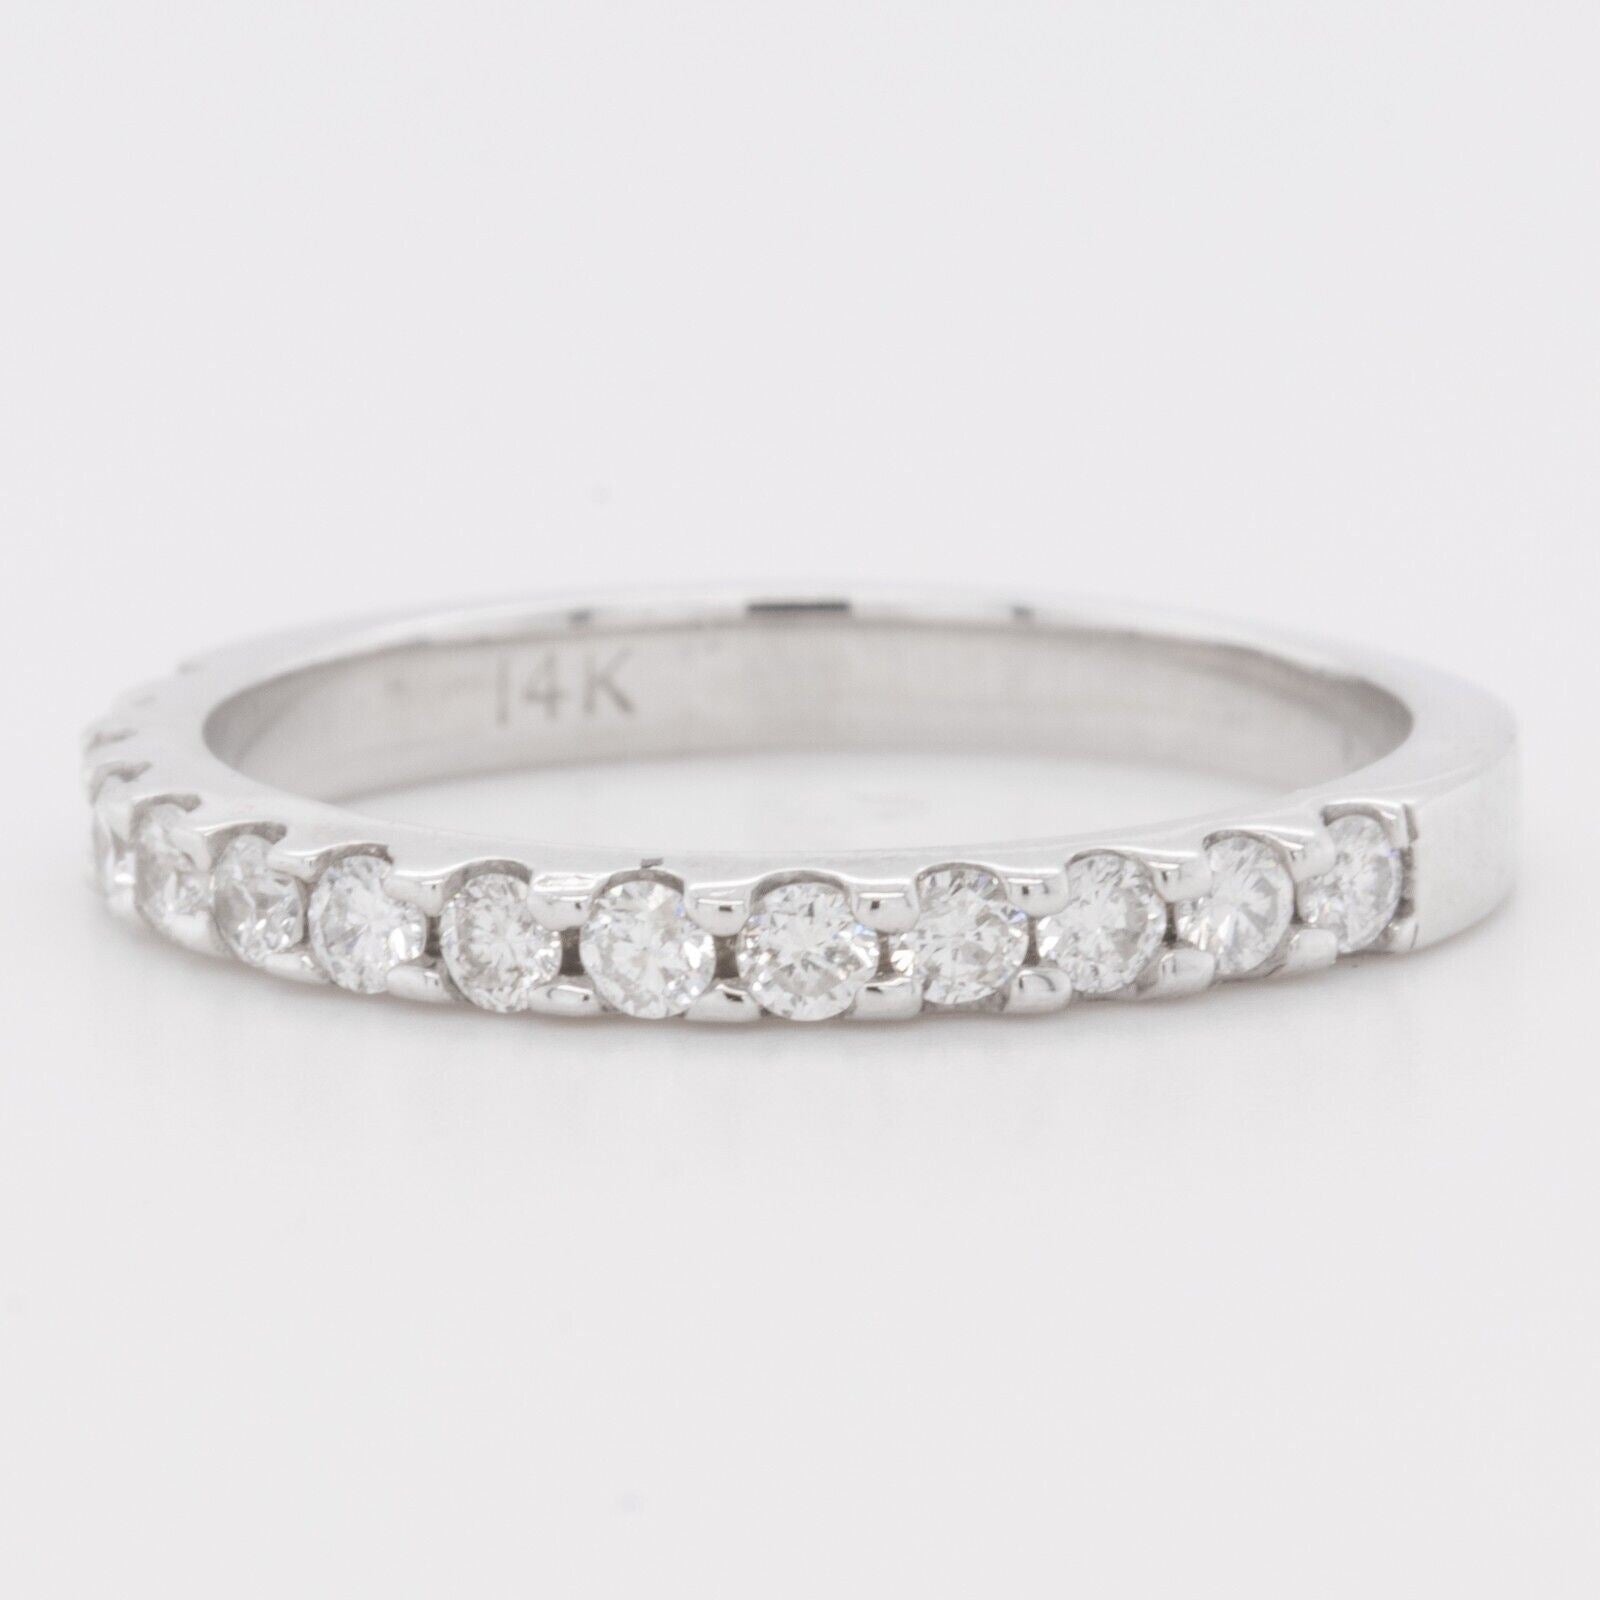 14k White Gold Diamond 14 Stone Wedding Band 0.42ctw G VS2 Ring Size 6